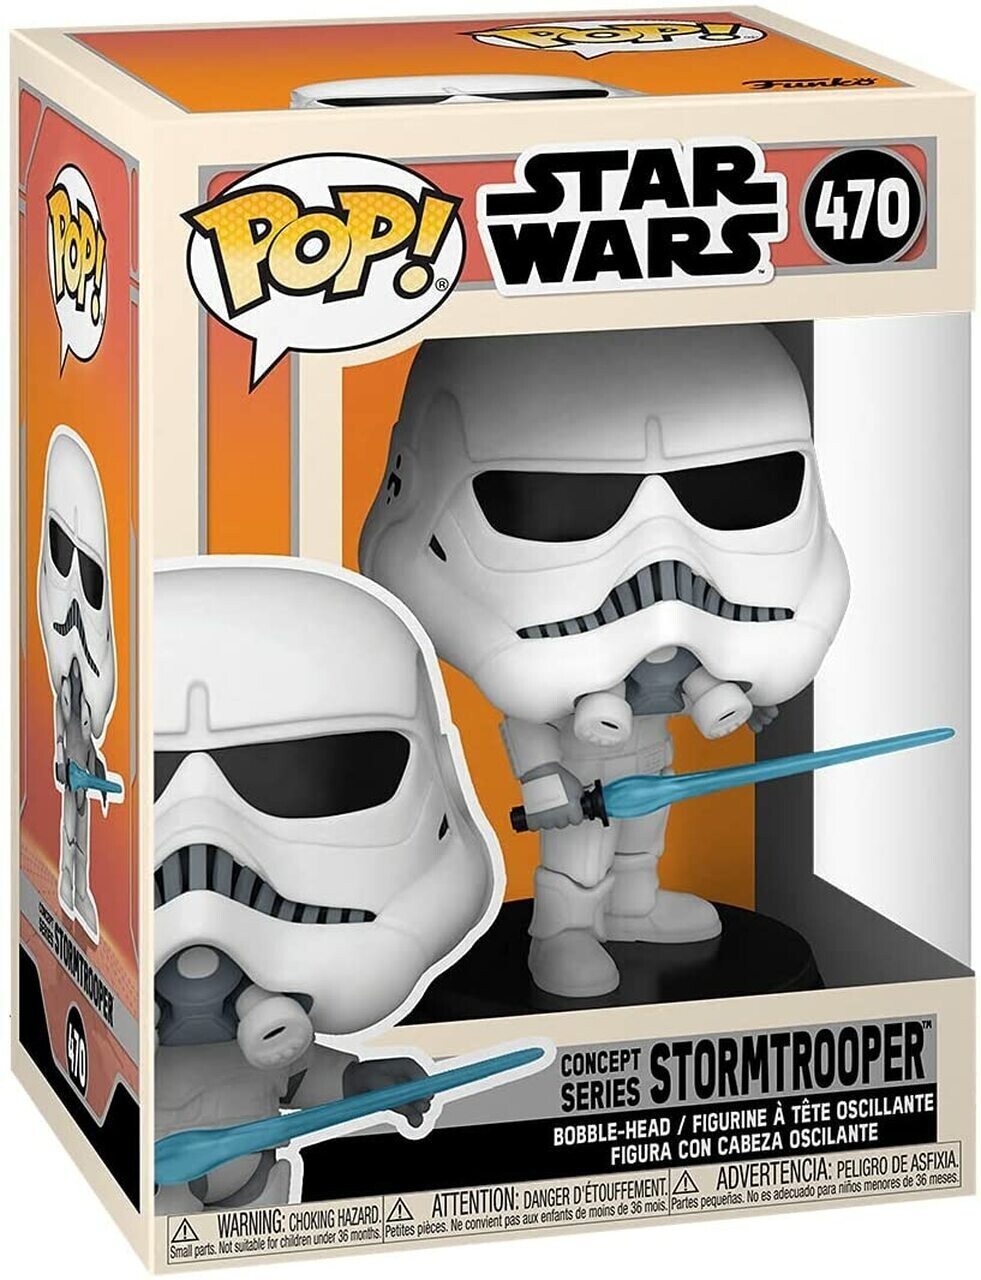 Star Wars Stormtrooper  Funko 470